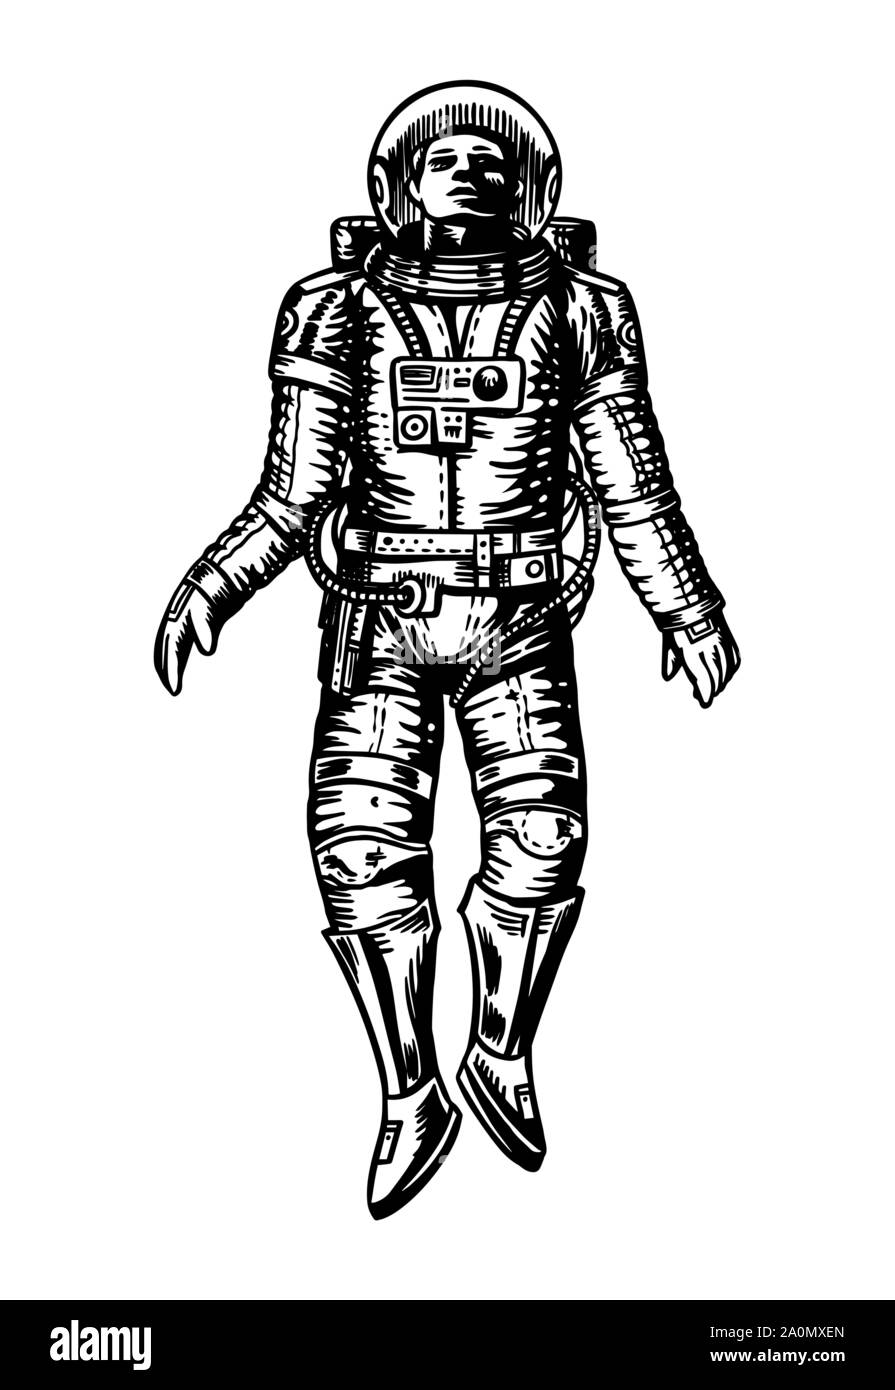 Astronaut Spaceman Suit Illustration: Exploring the Unknown